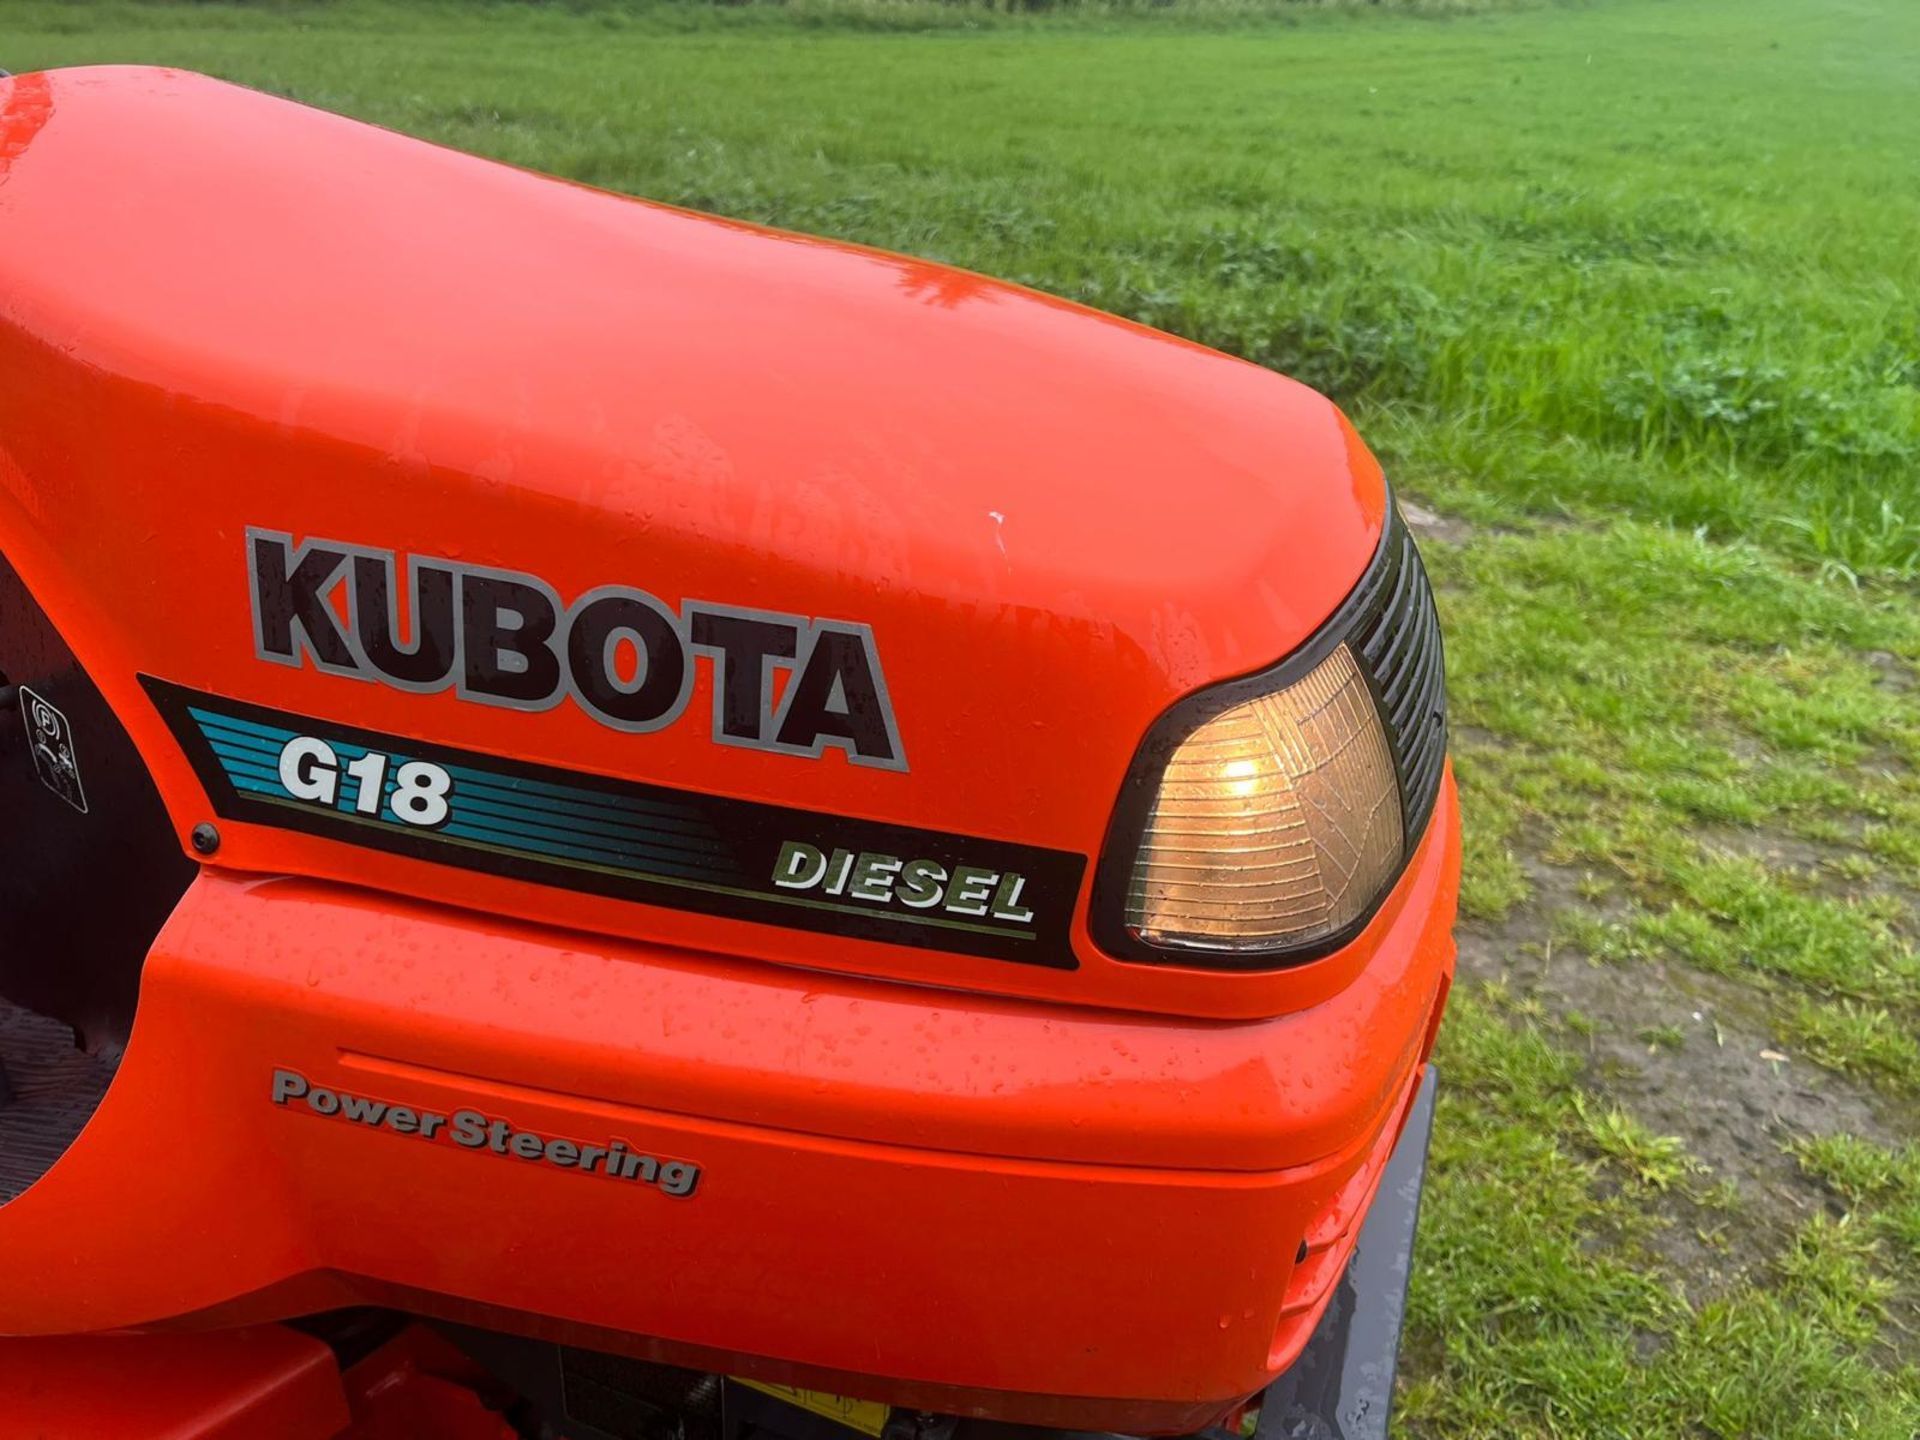 Kubota g18 ride on lawn mower (mint condition) *PLUS VAT* - Image 21 of 26